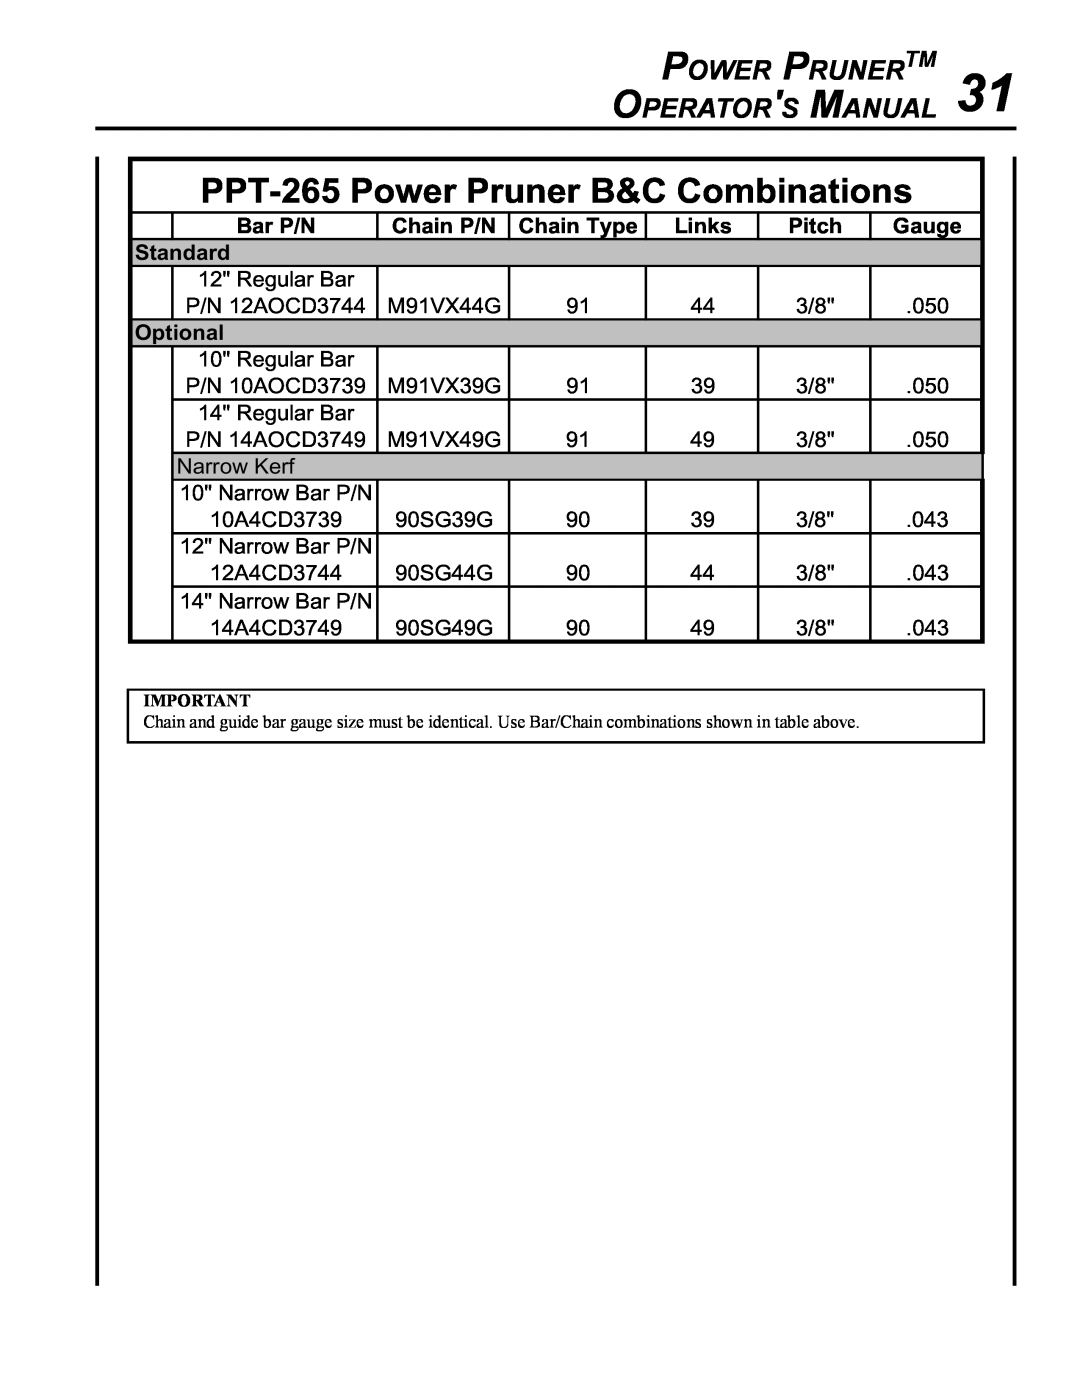 Echo PPT-265H Bar P/N, Chain P/N, Chain Type, Links, Pitch, Gauge, Standard, Optional, Power PrunerTM Operators Manual 